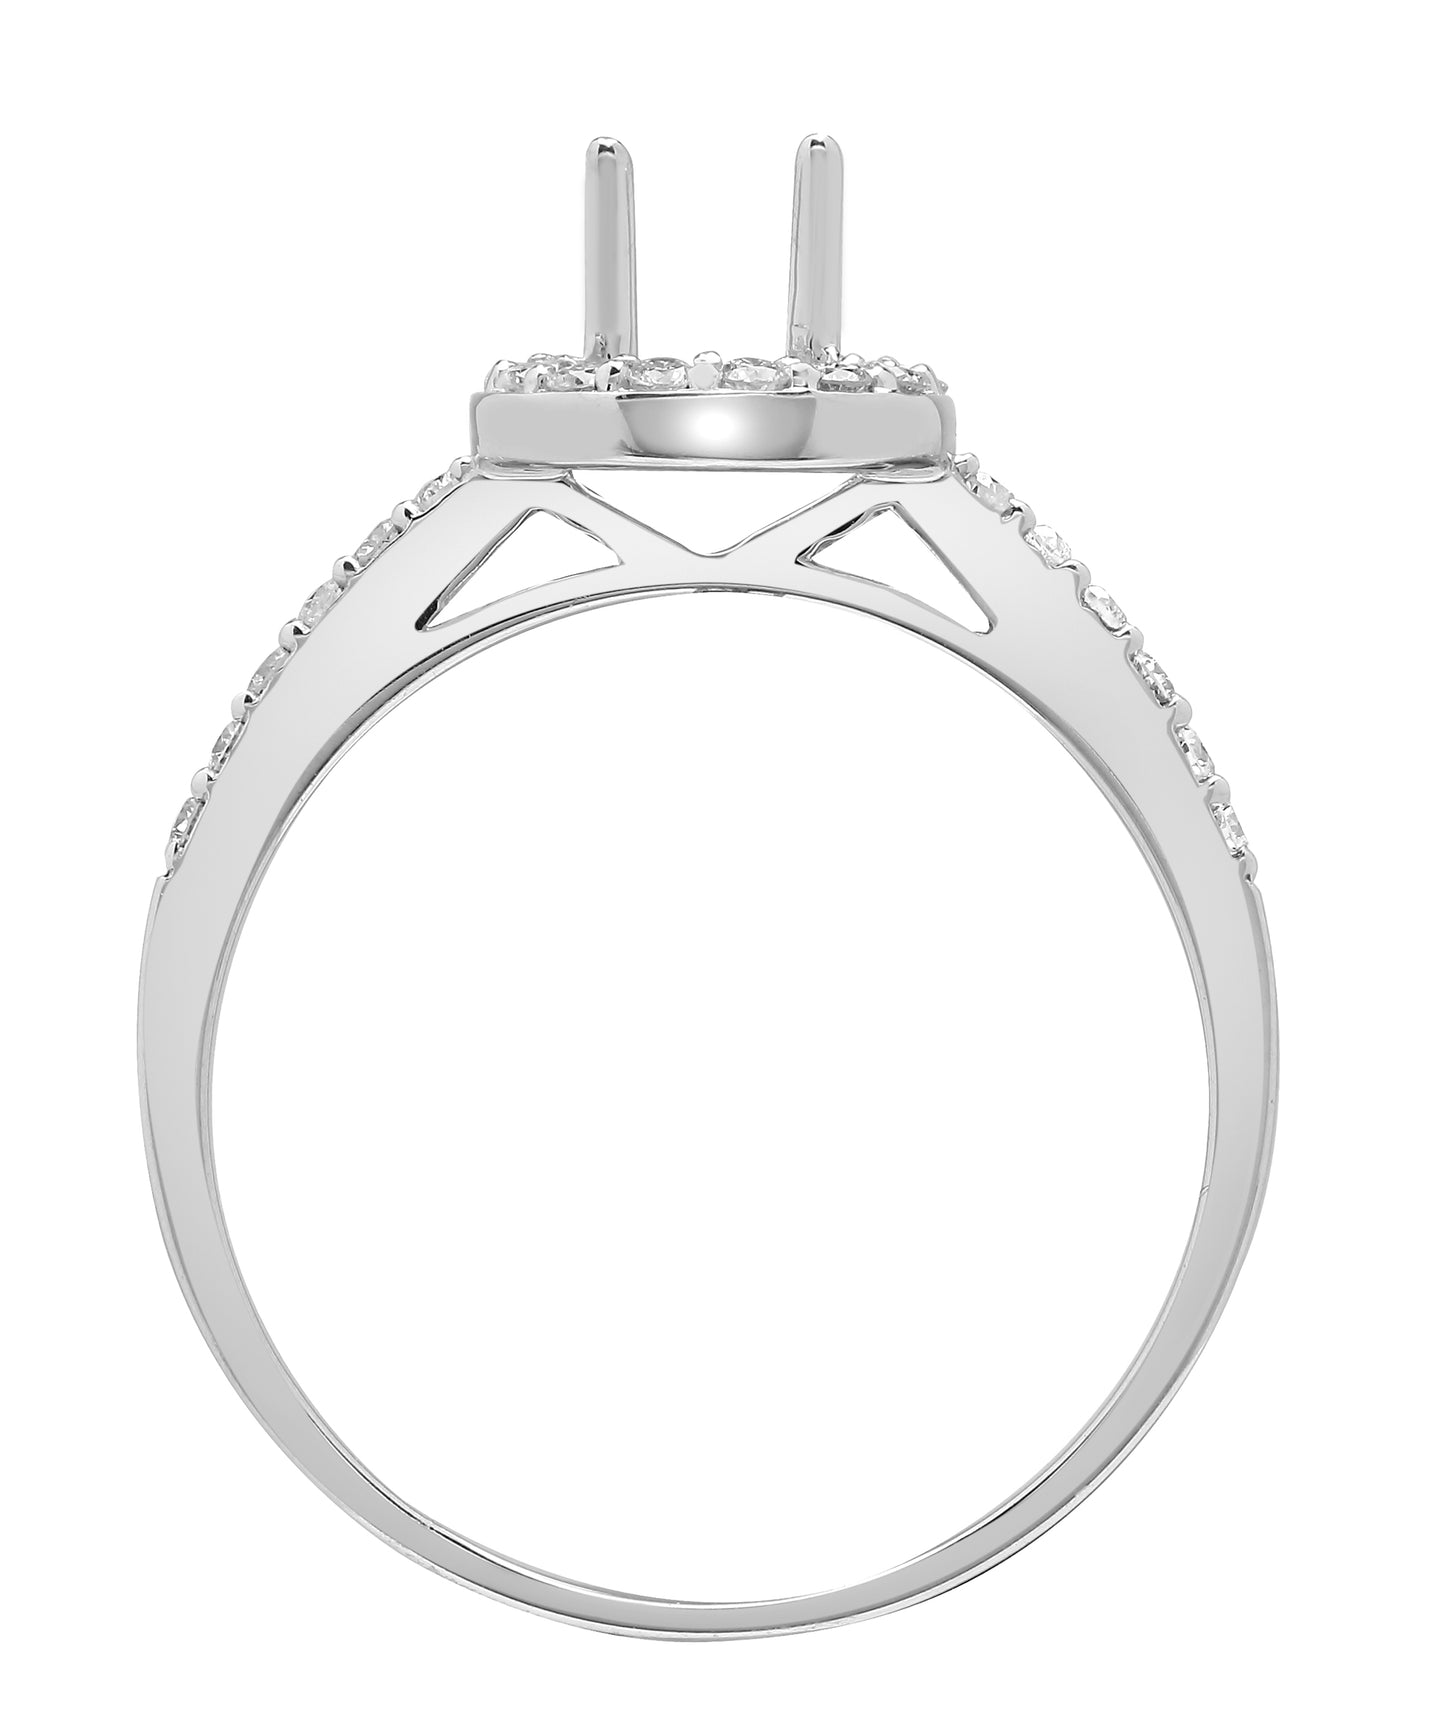 18ct White Gold  0.24ct Diamond Semi Set Mount Engagement Ring 8mm - 18R825-050